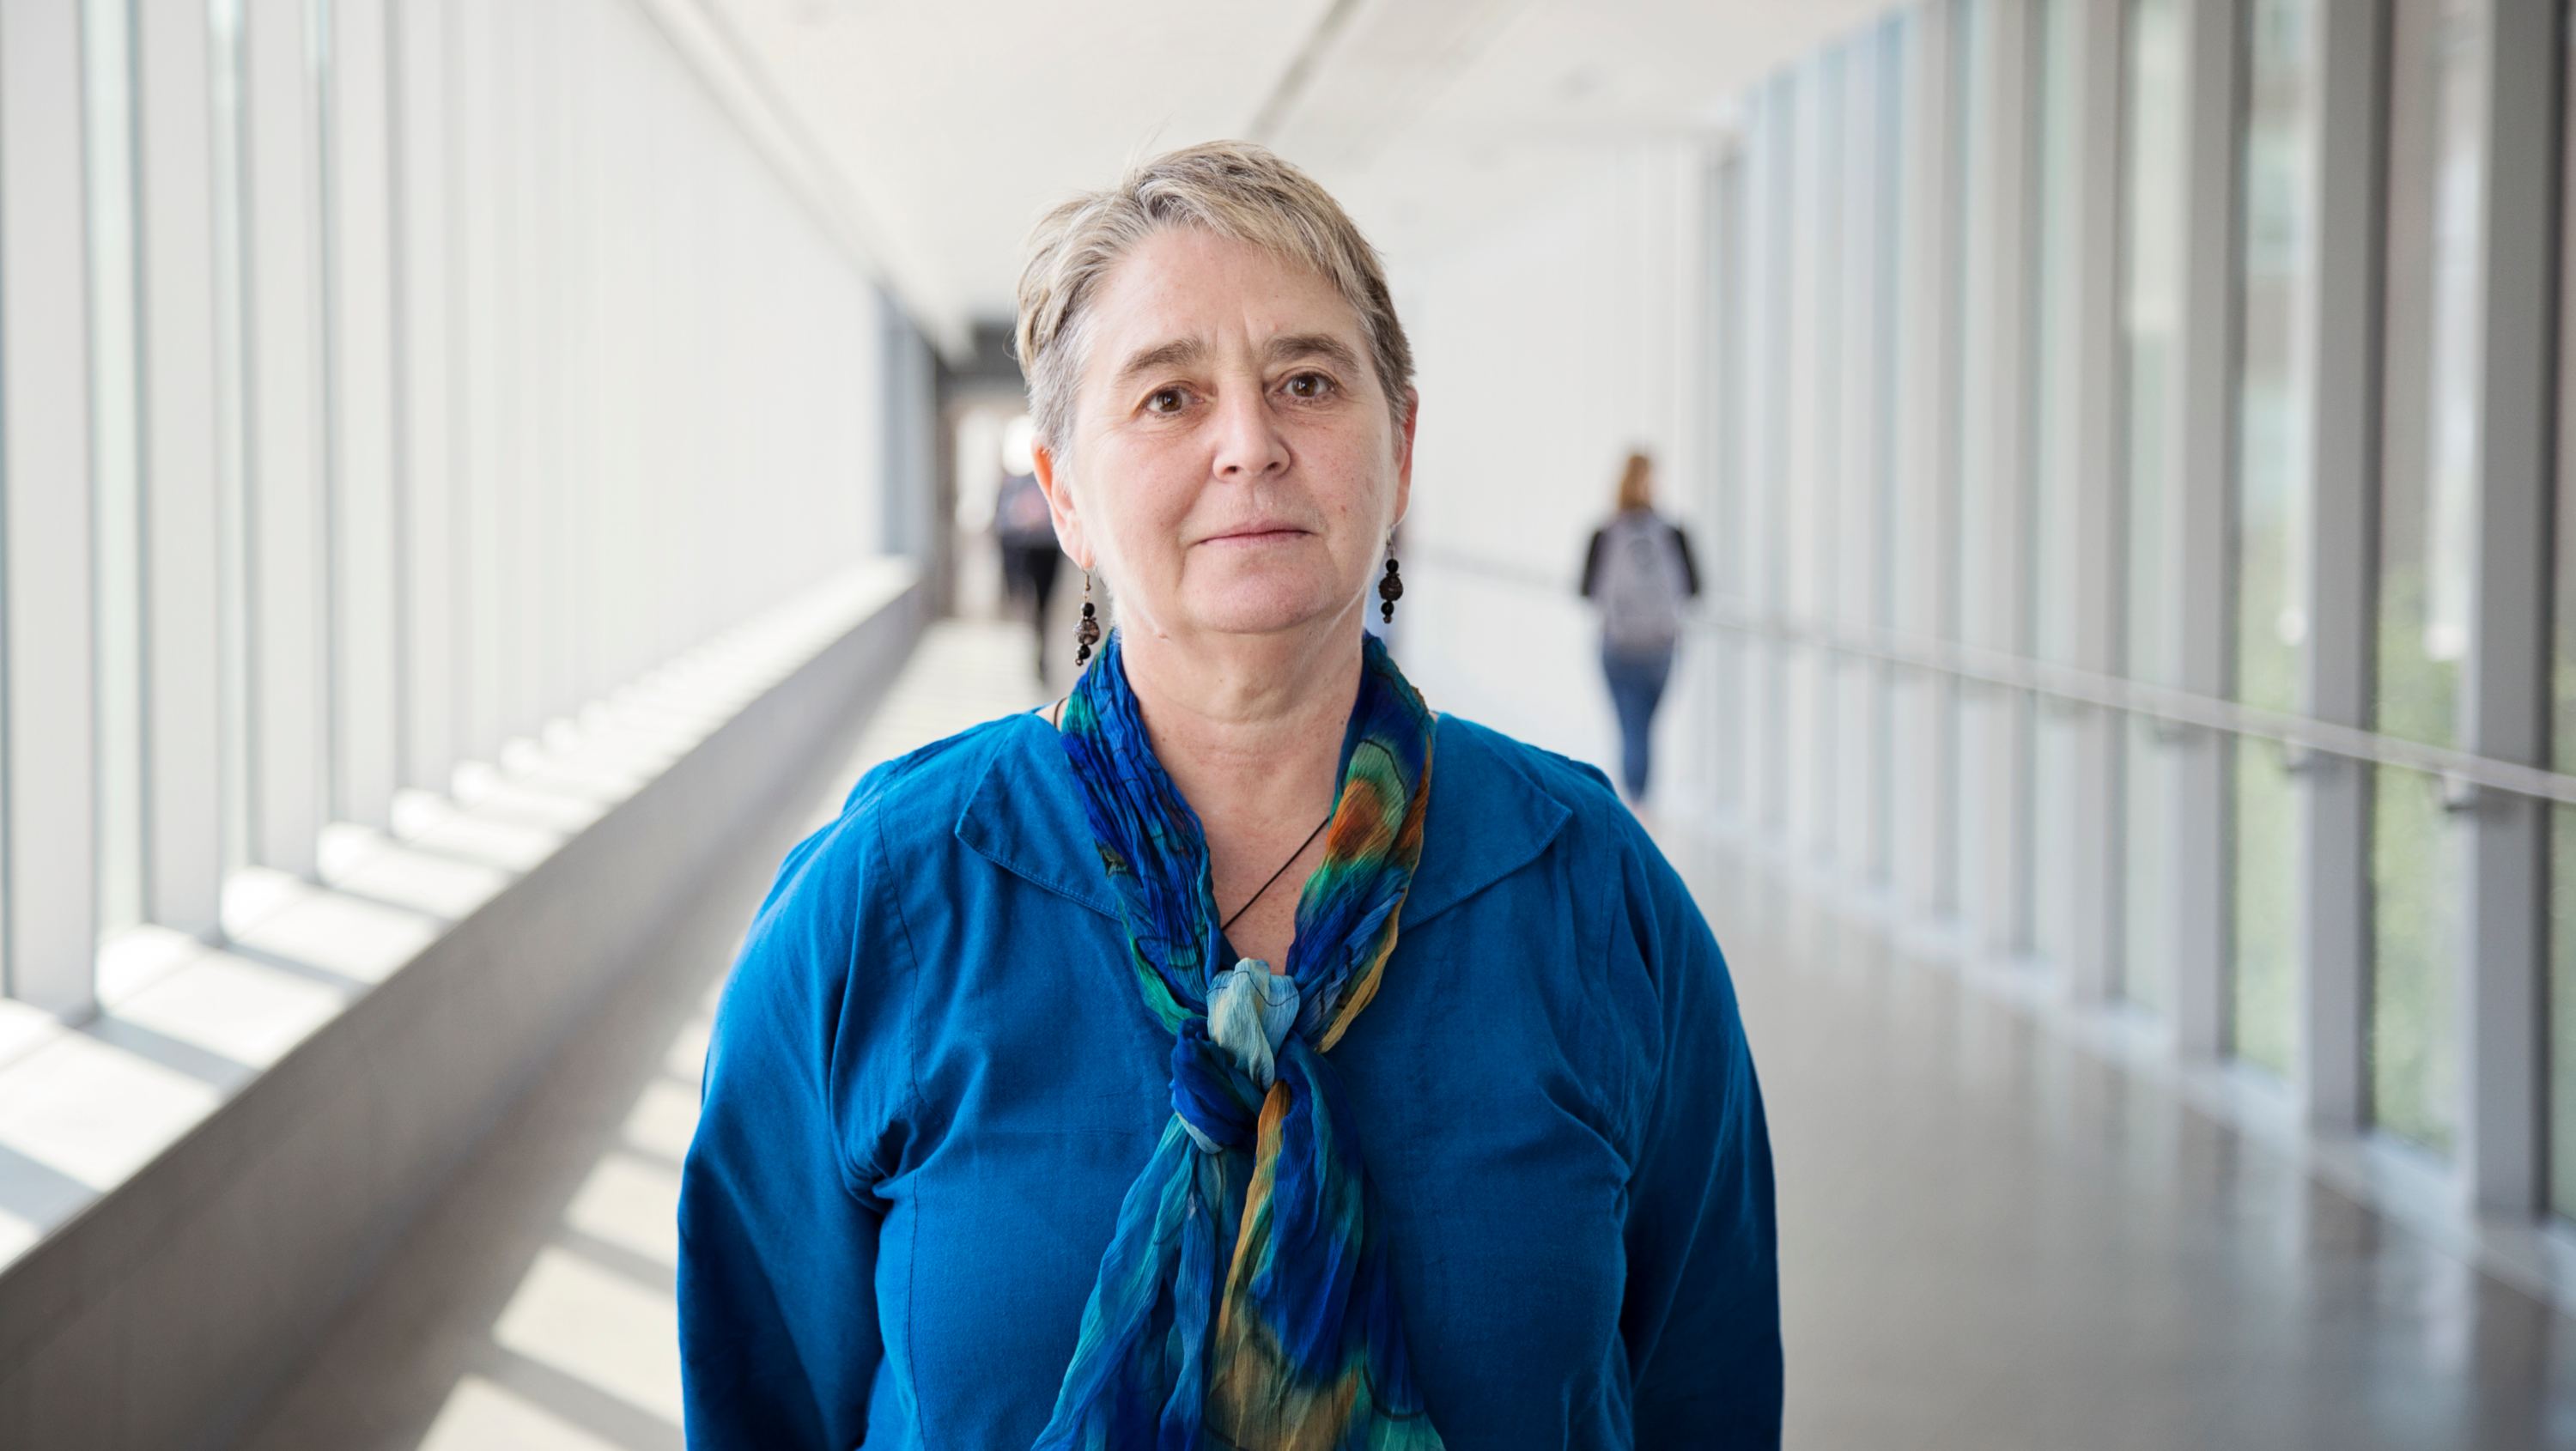 Public health professor Denise Spitzer